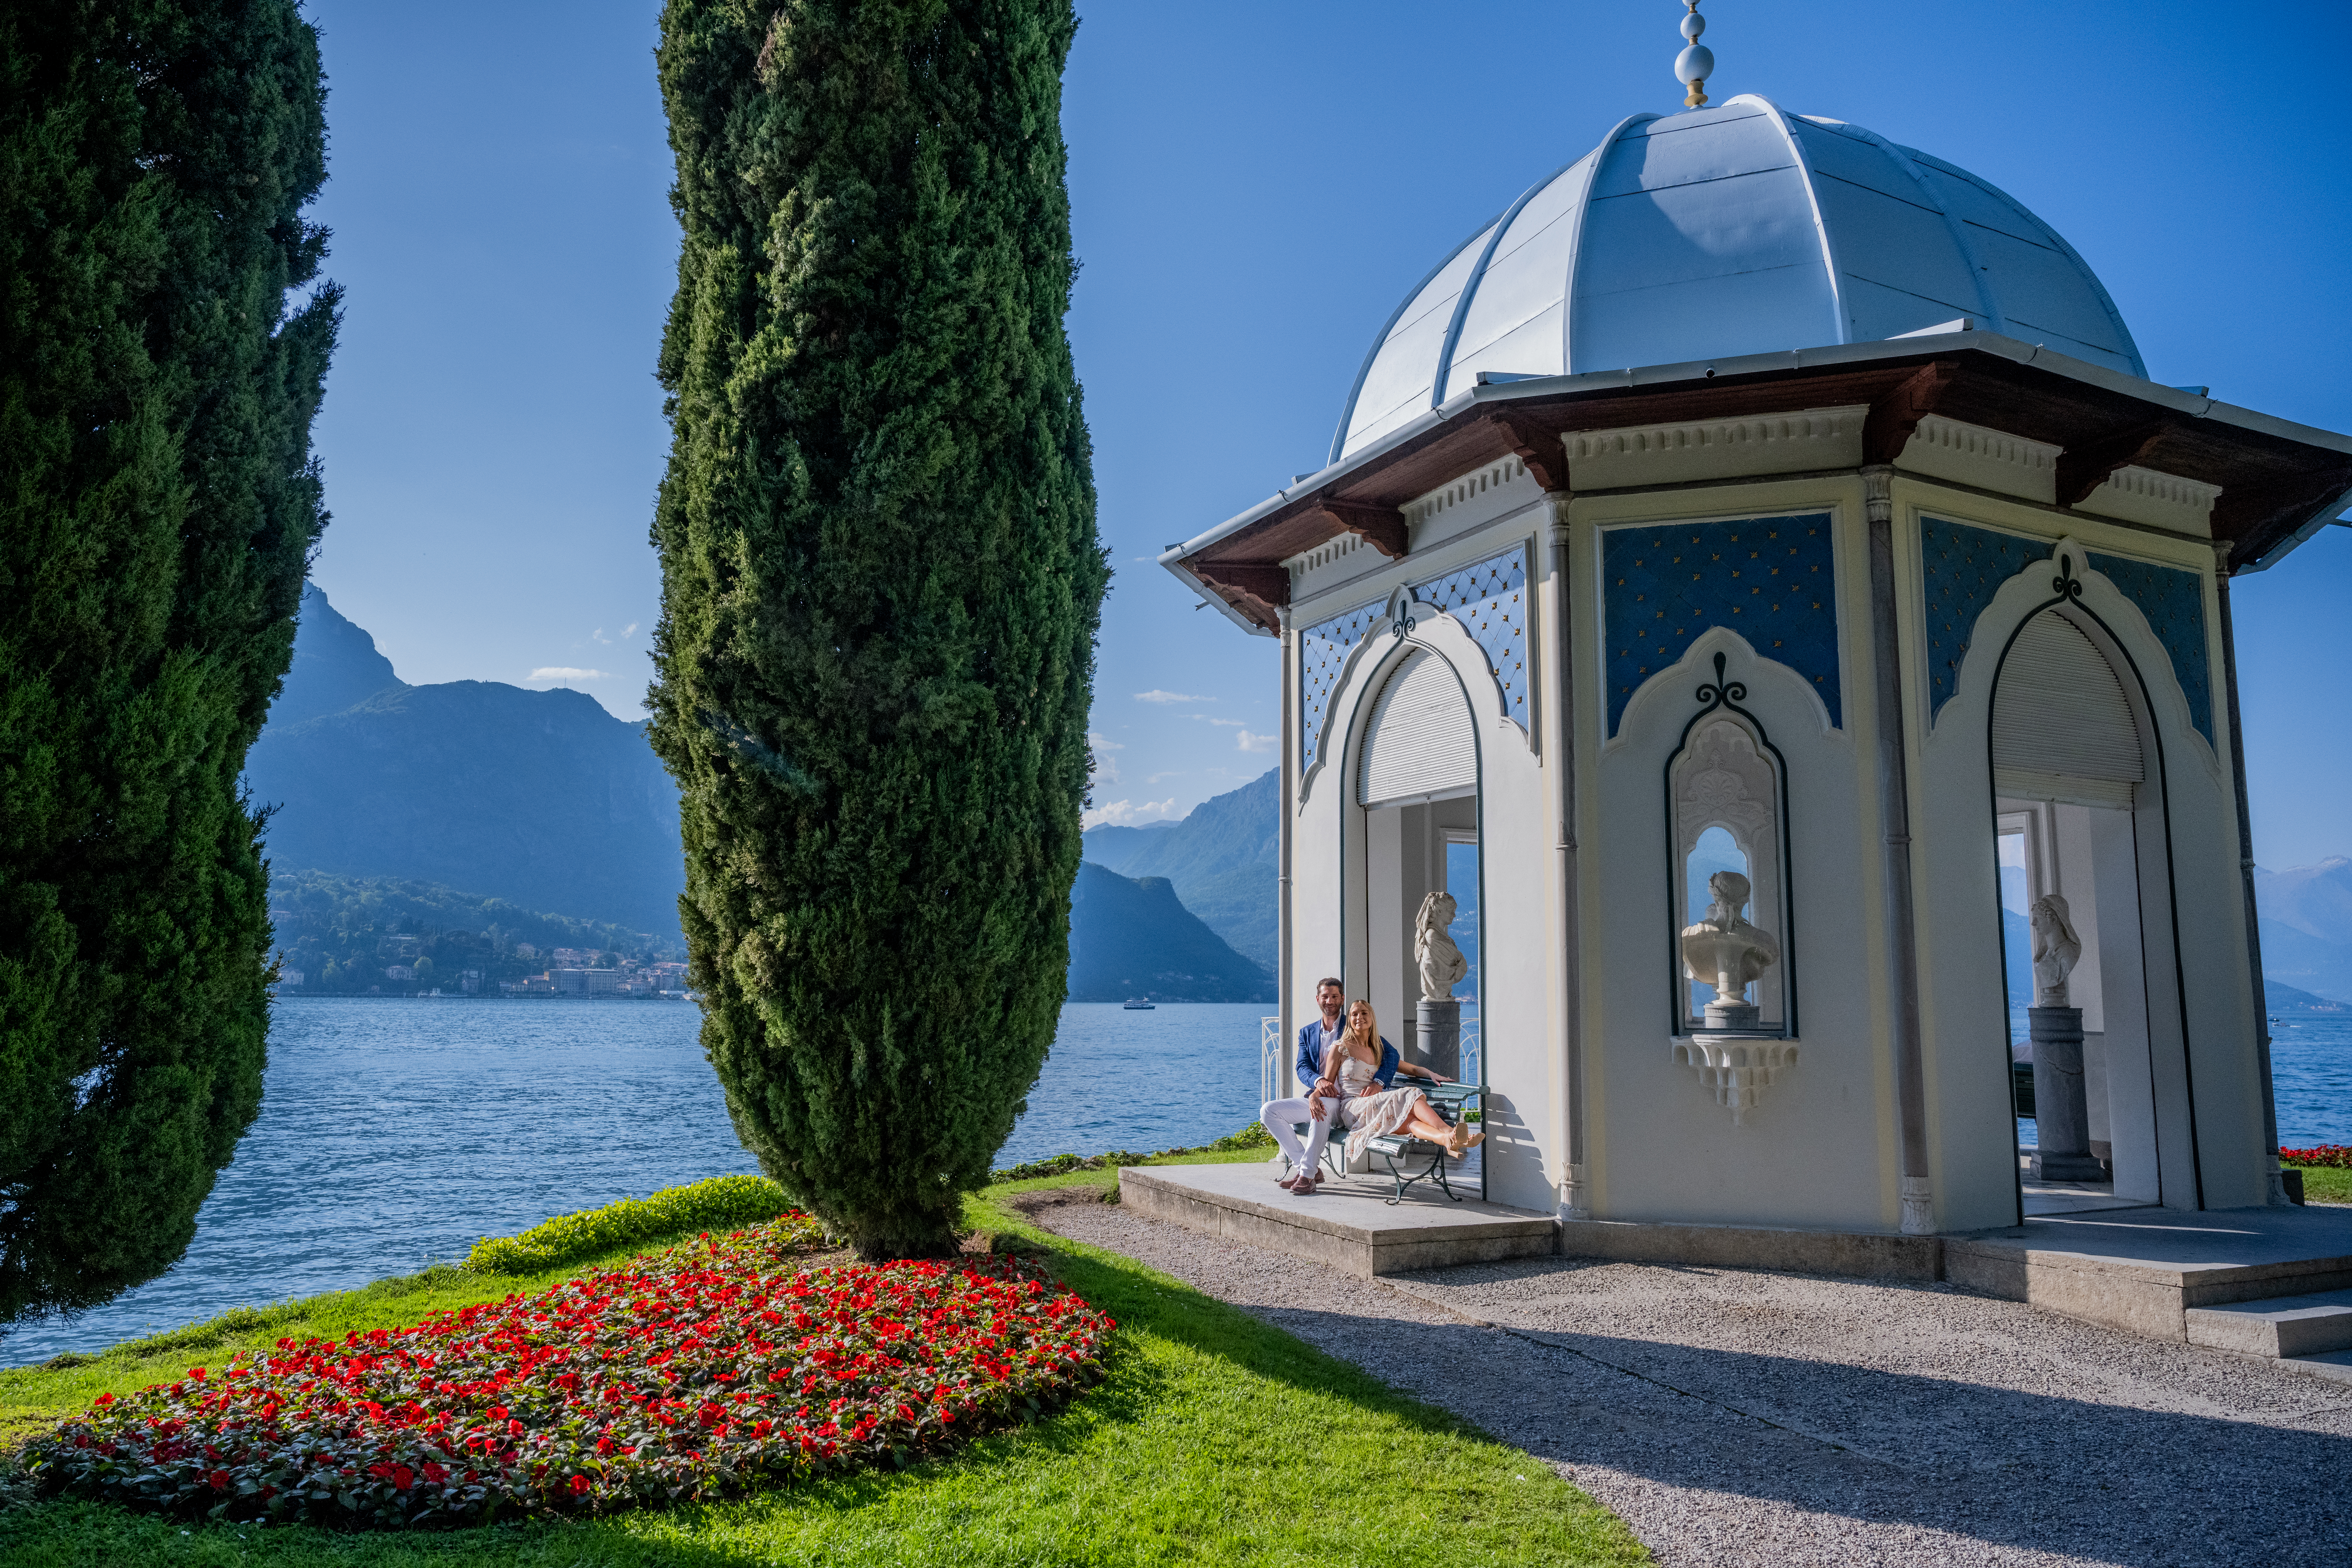 Couple's photoshoot by Riccardo, Localgrapher at Lake Como